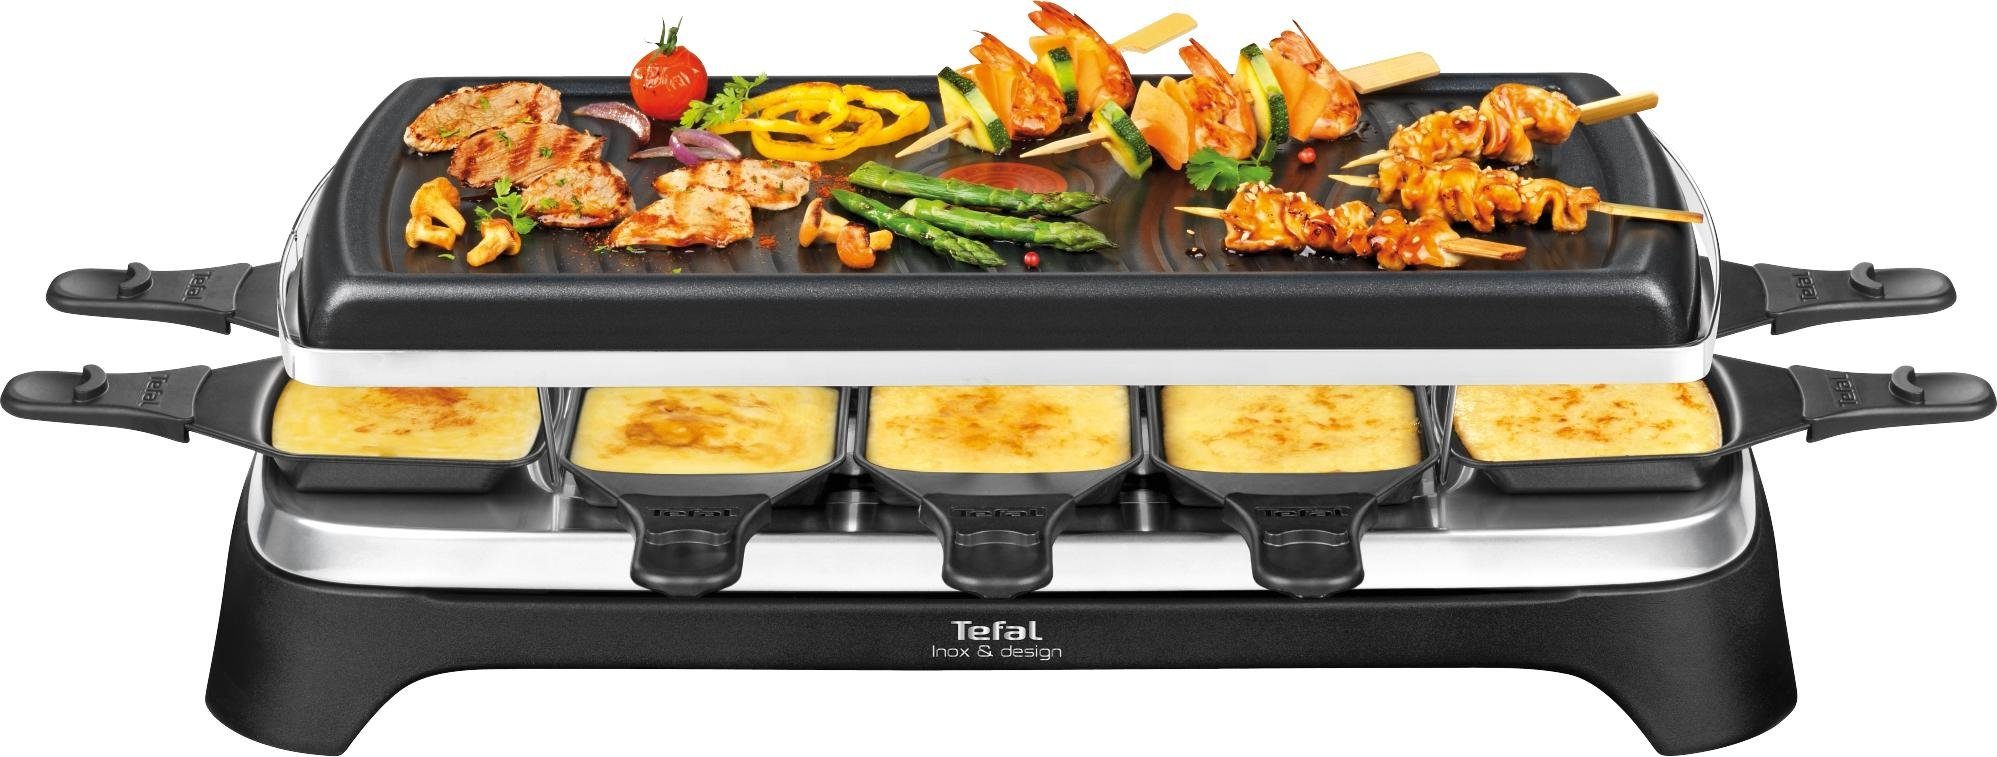 Tefal Raclette RE4588, 10 Raclettepfännchen, 1350 W, 10 Raclettepfännchen,  Antihaftbeschichtet und spülmaschinengeeignet online kaufen | OTTO